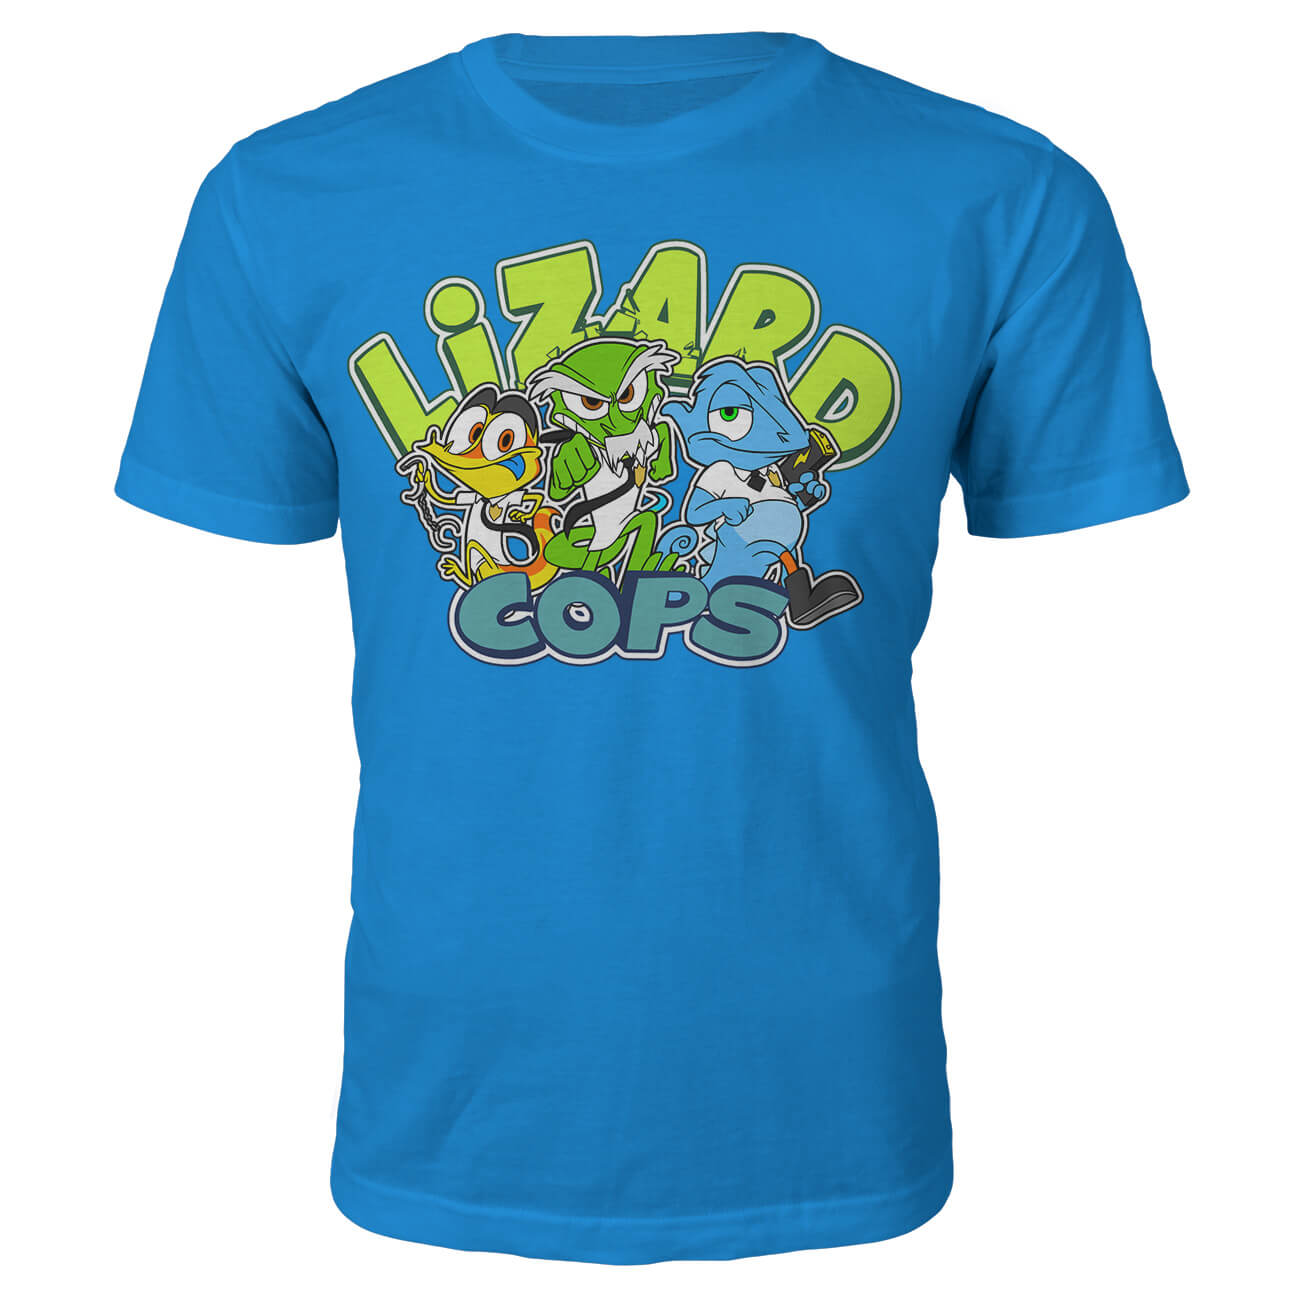 Lizard Cops T Shirt Kids Xl 12 13 Years Blue